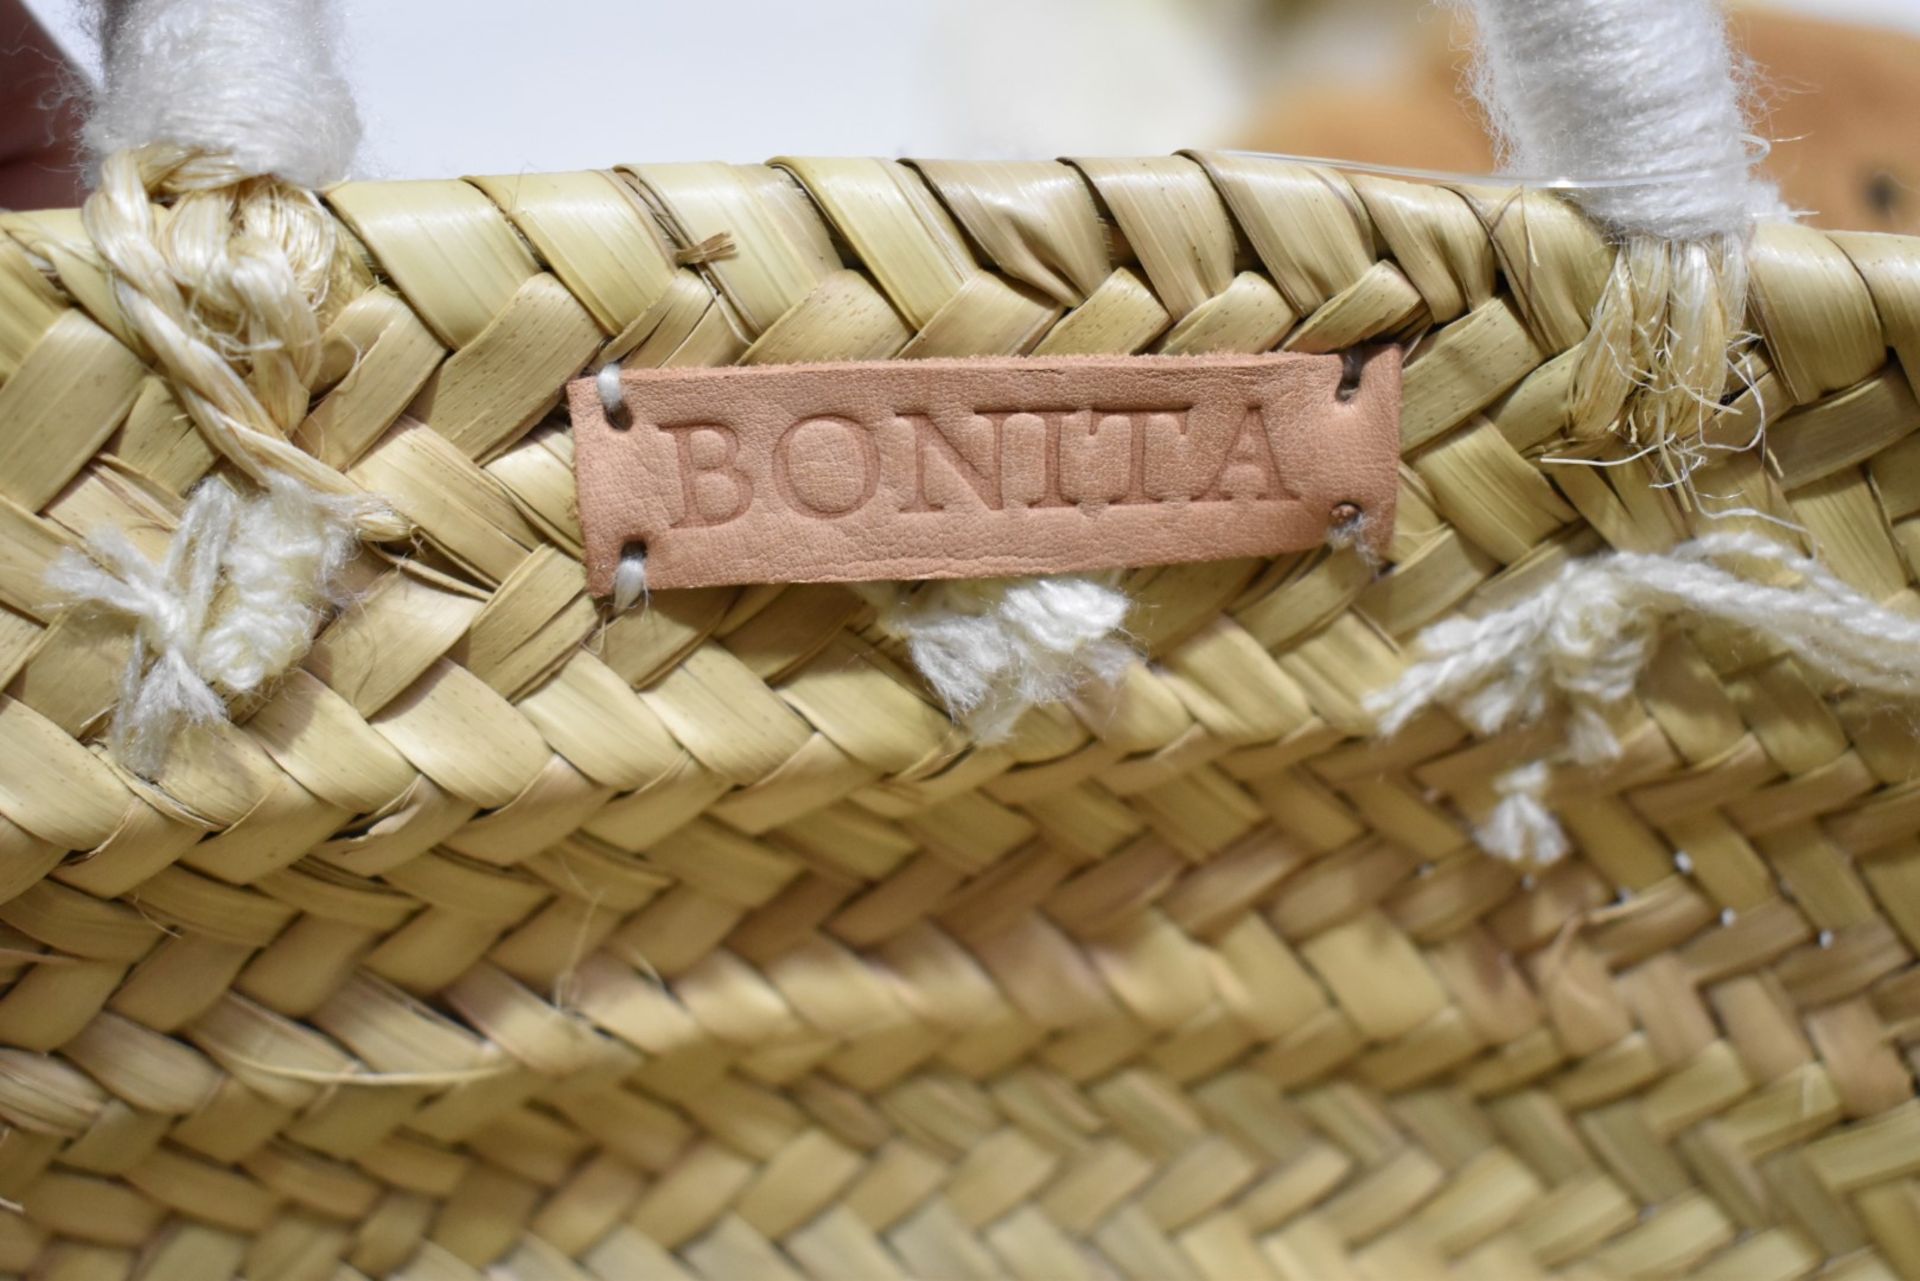 1 x BONITA Large Straw Summer Pom-Pom Basket Bag - Original Price £89.95 - Image 3 of 4